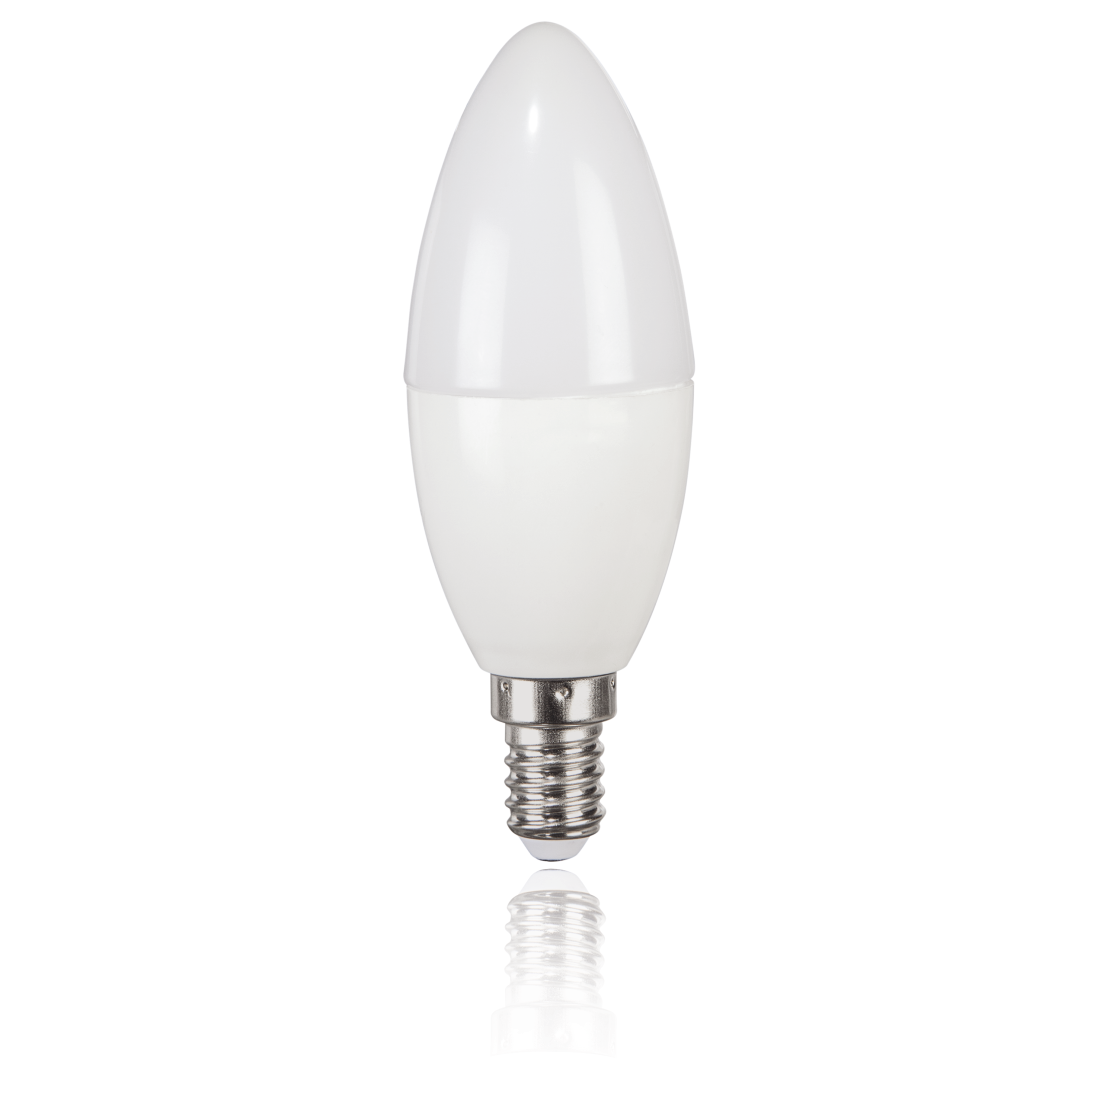 abx2 Druckfähige Abbildung 2 - Xavax, LED-Lampe, E14, 806lm ersetzt 60W, Kerzenlampe, Warmweiß